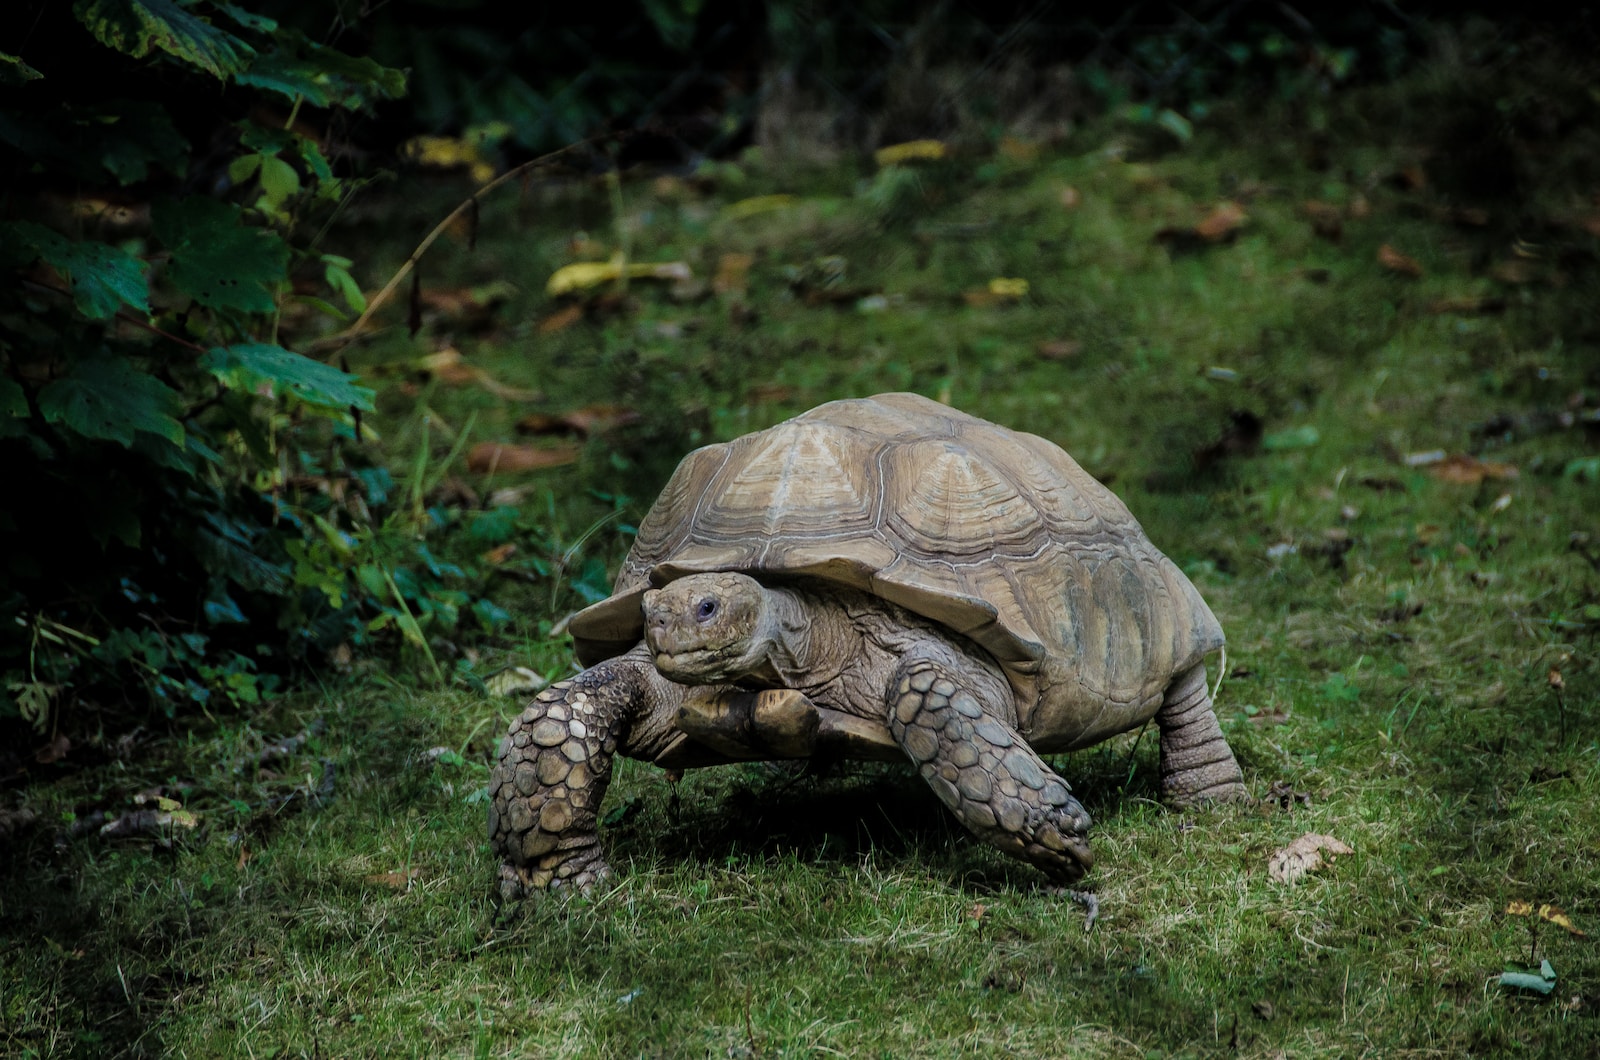 box turtles in arkansas gray tortoise walking on green grass field